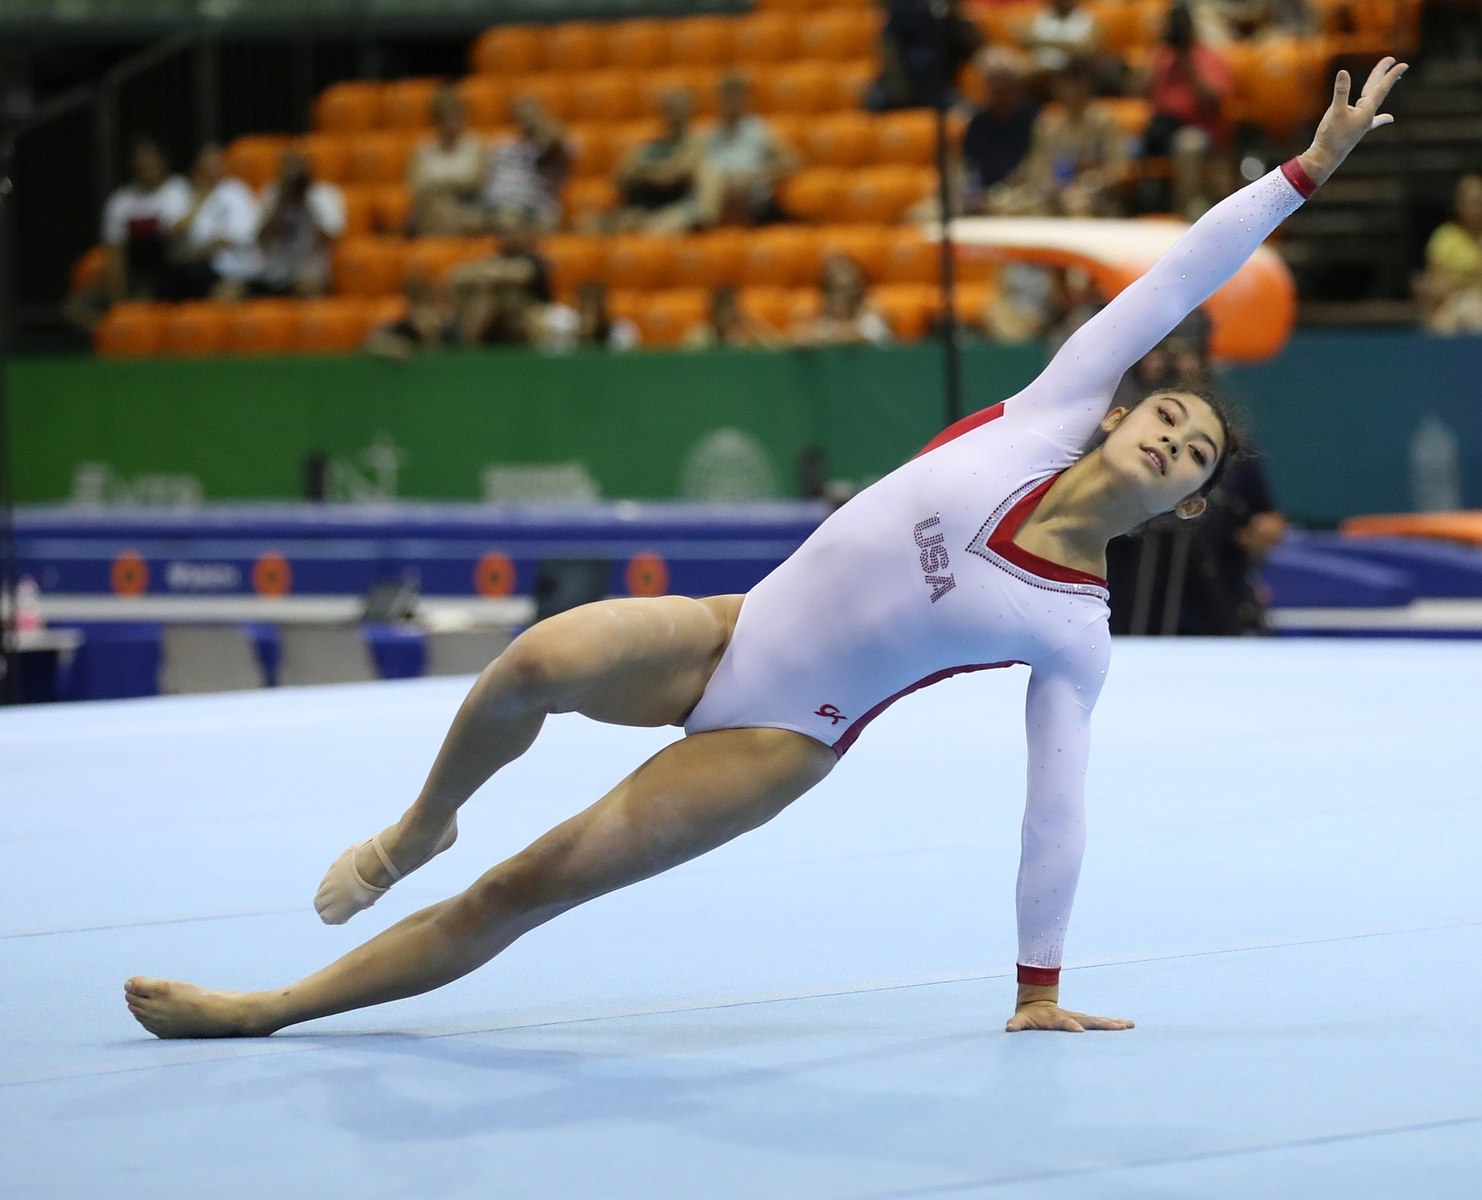 Dicello kayla gymnast milwaukee competes luogo tenutasi venne compete femminile